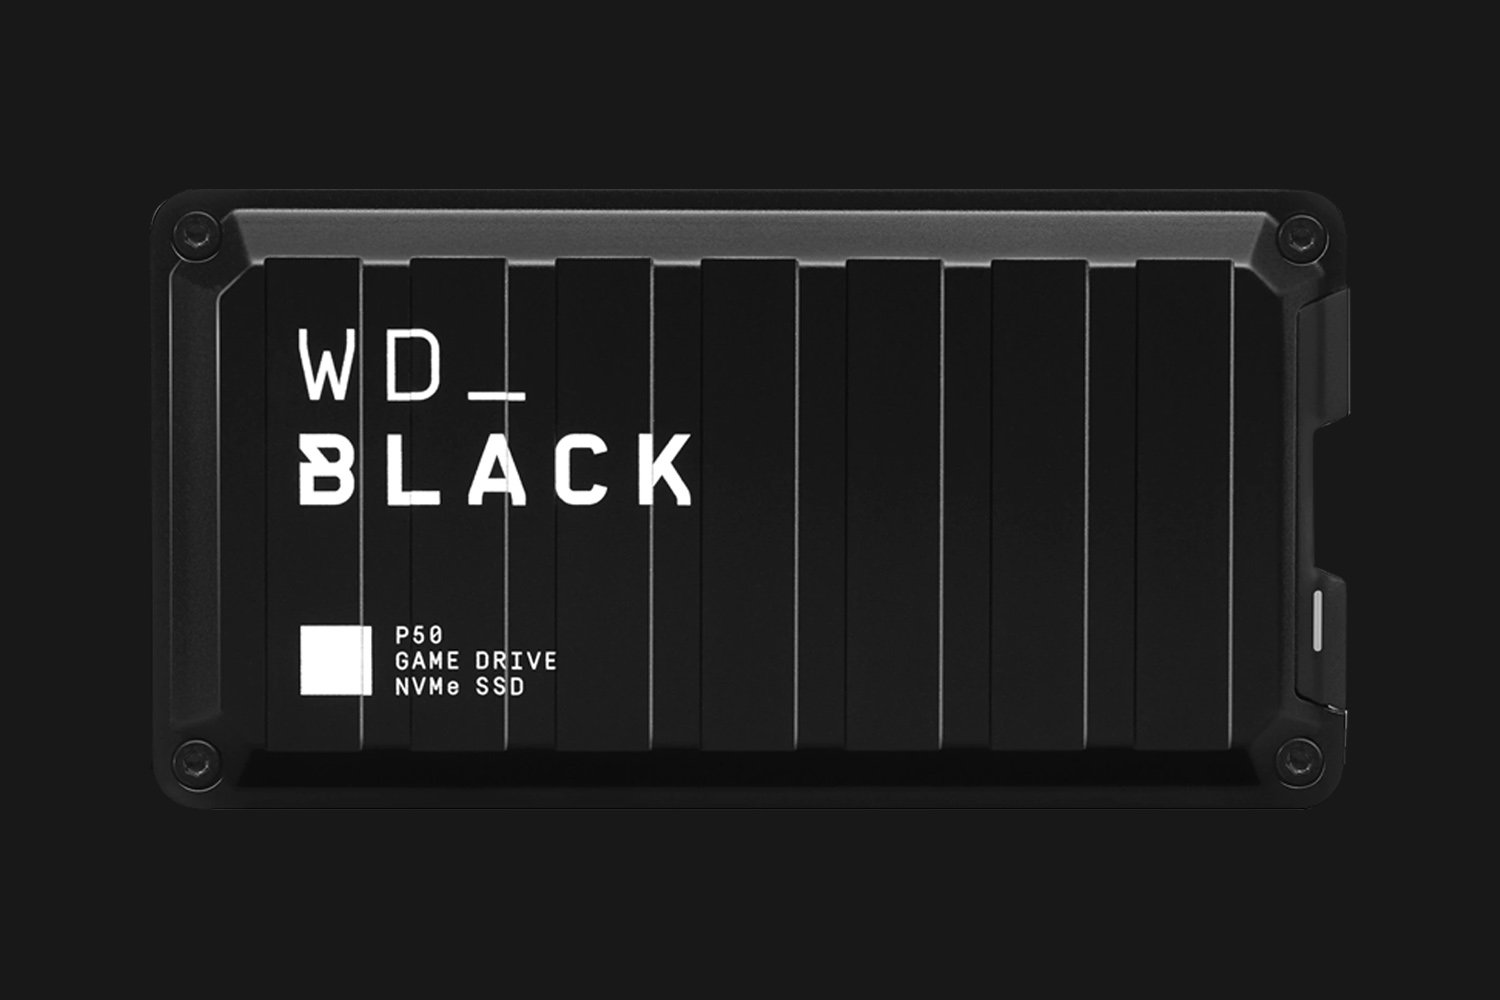 WD_Black 1TB P50 Game Drive